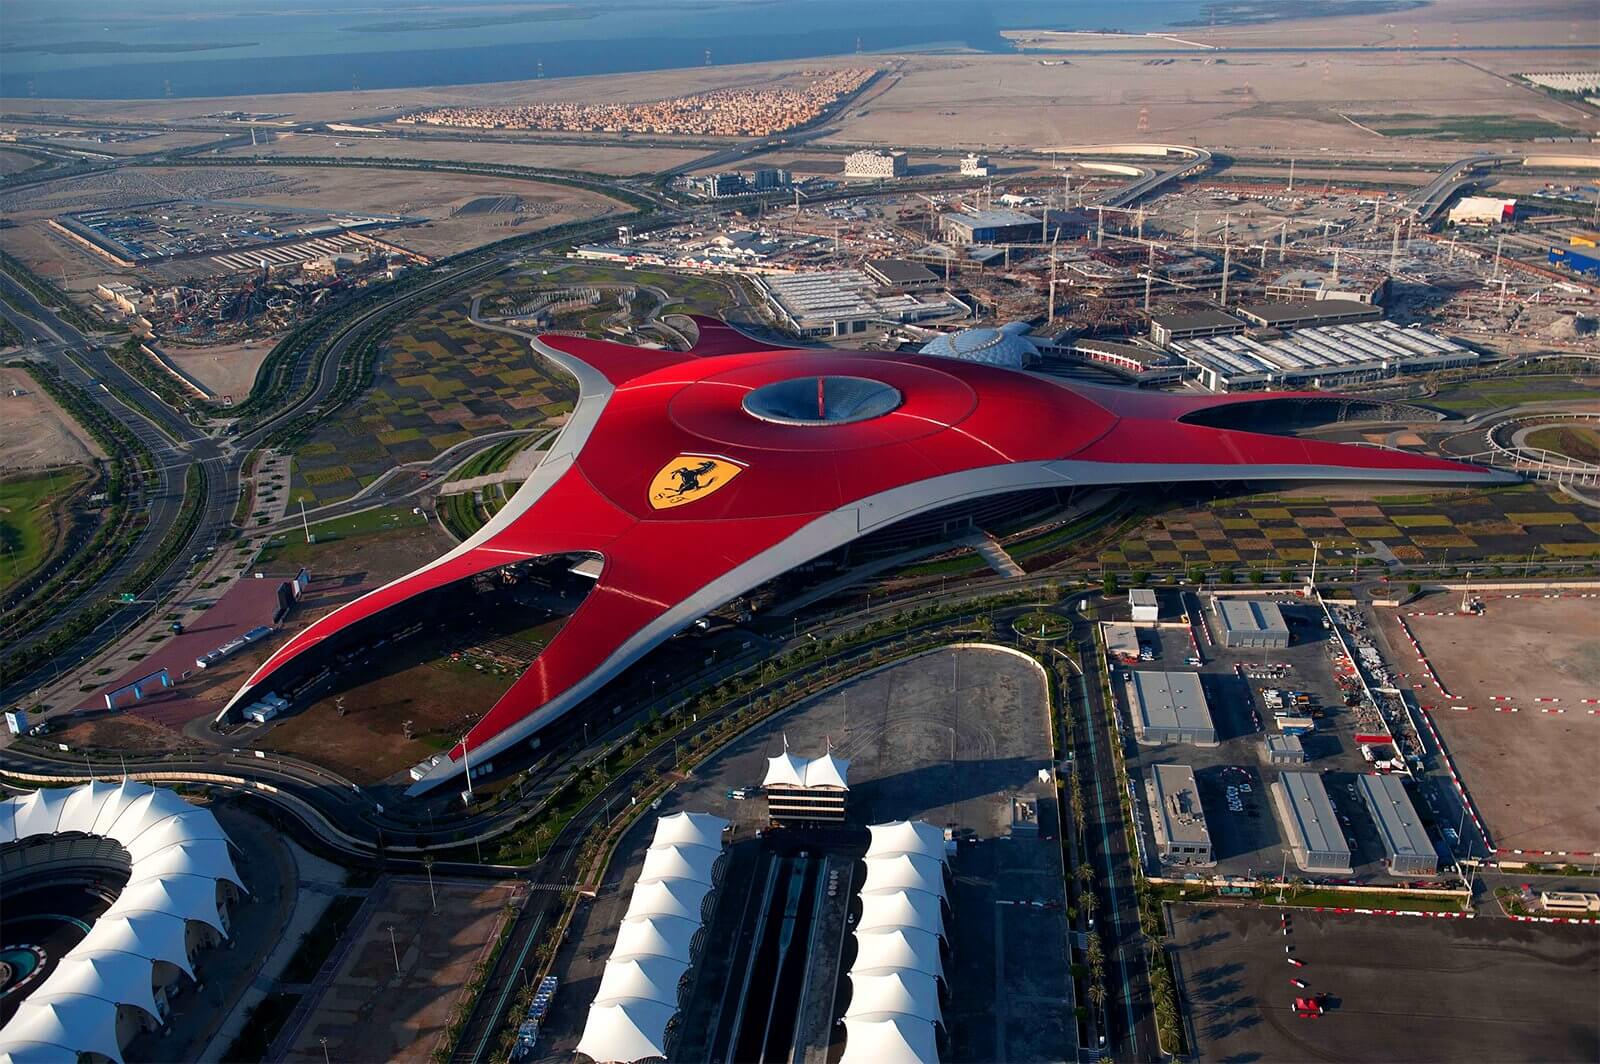 Парк развлечений Ferrari World